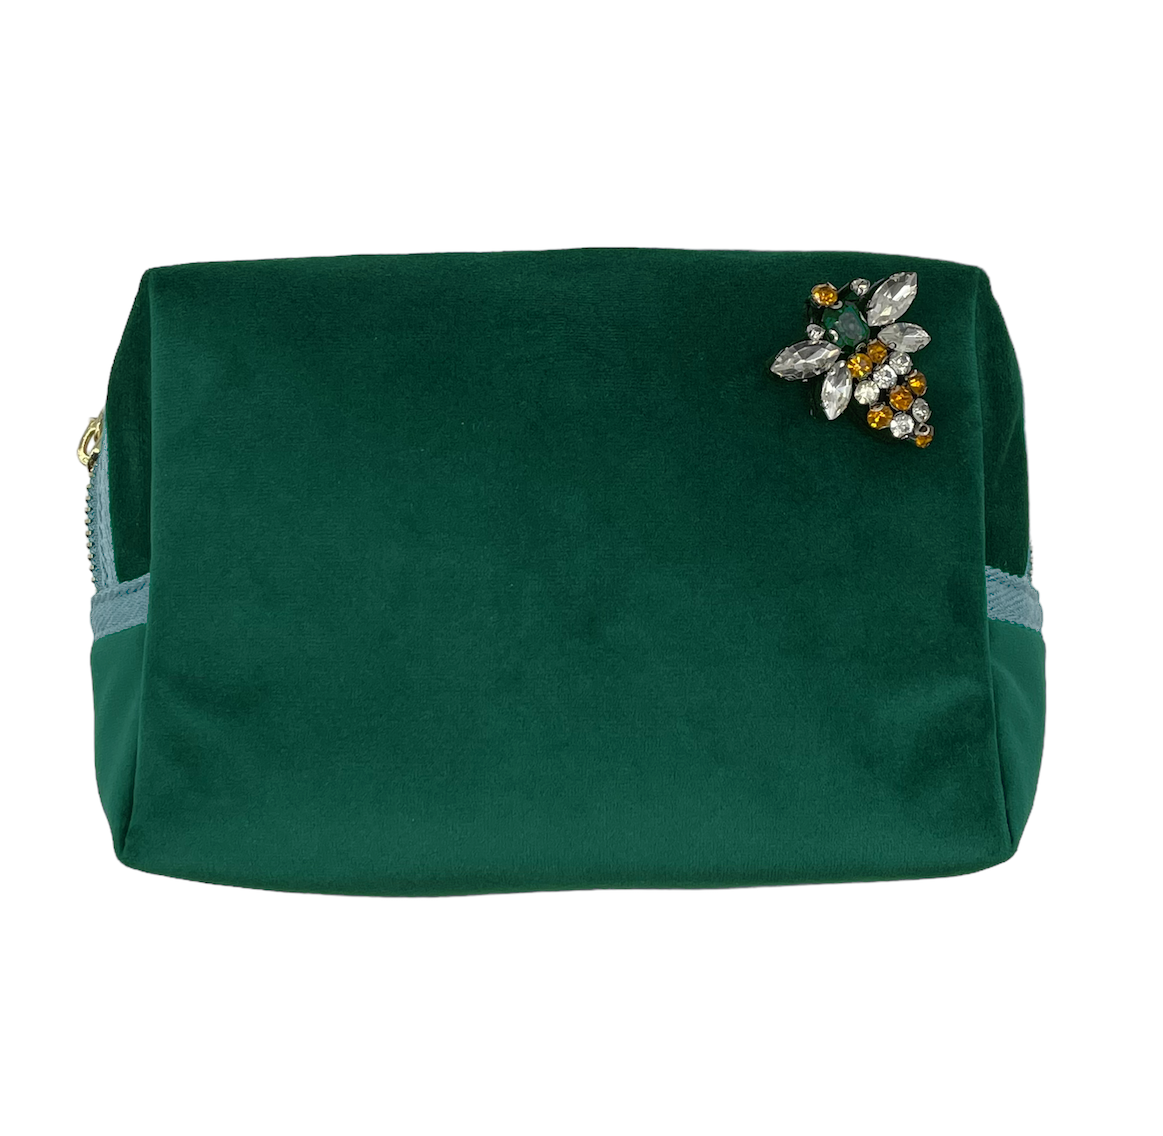 Green make-up bag & queen bee pin - recycled velvet